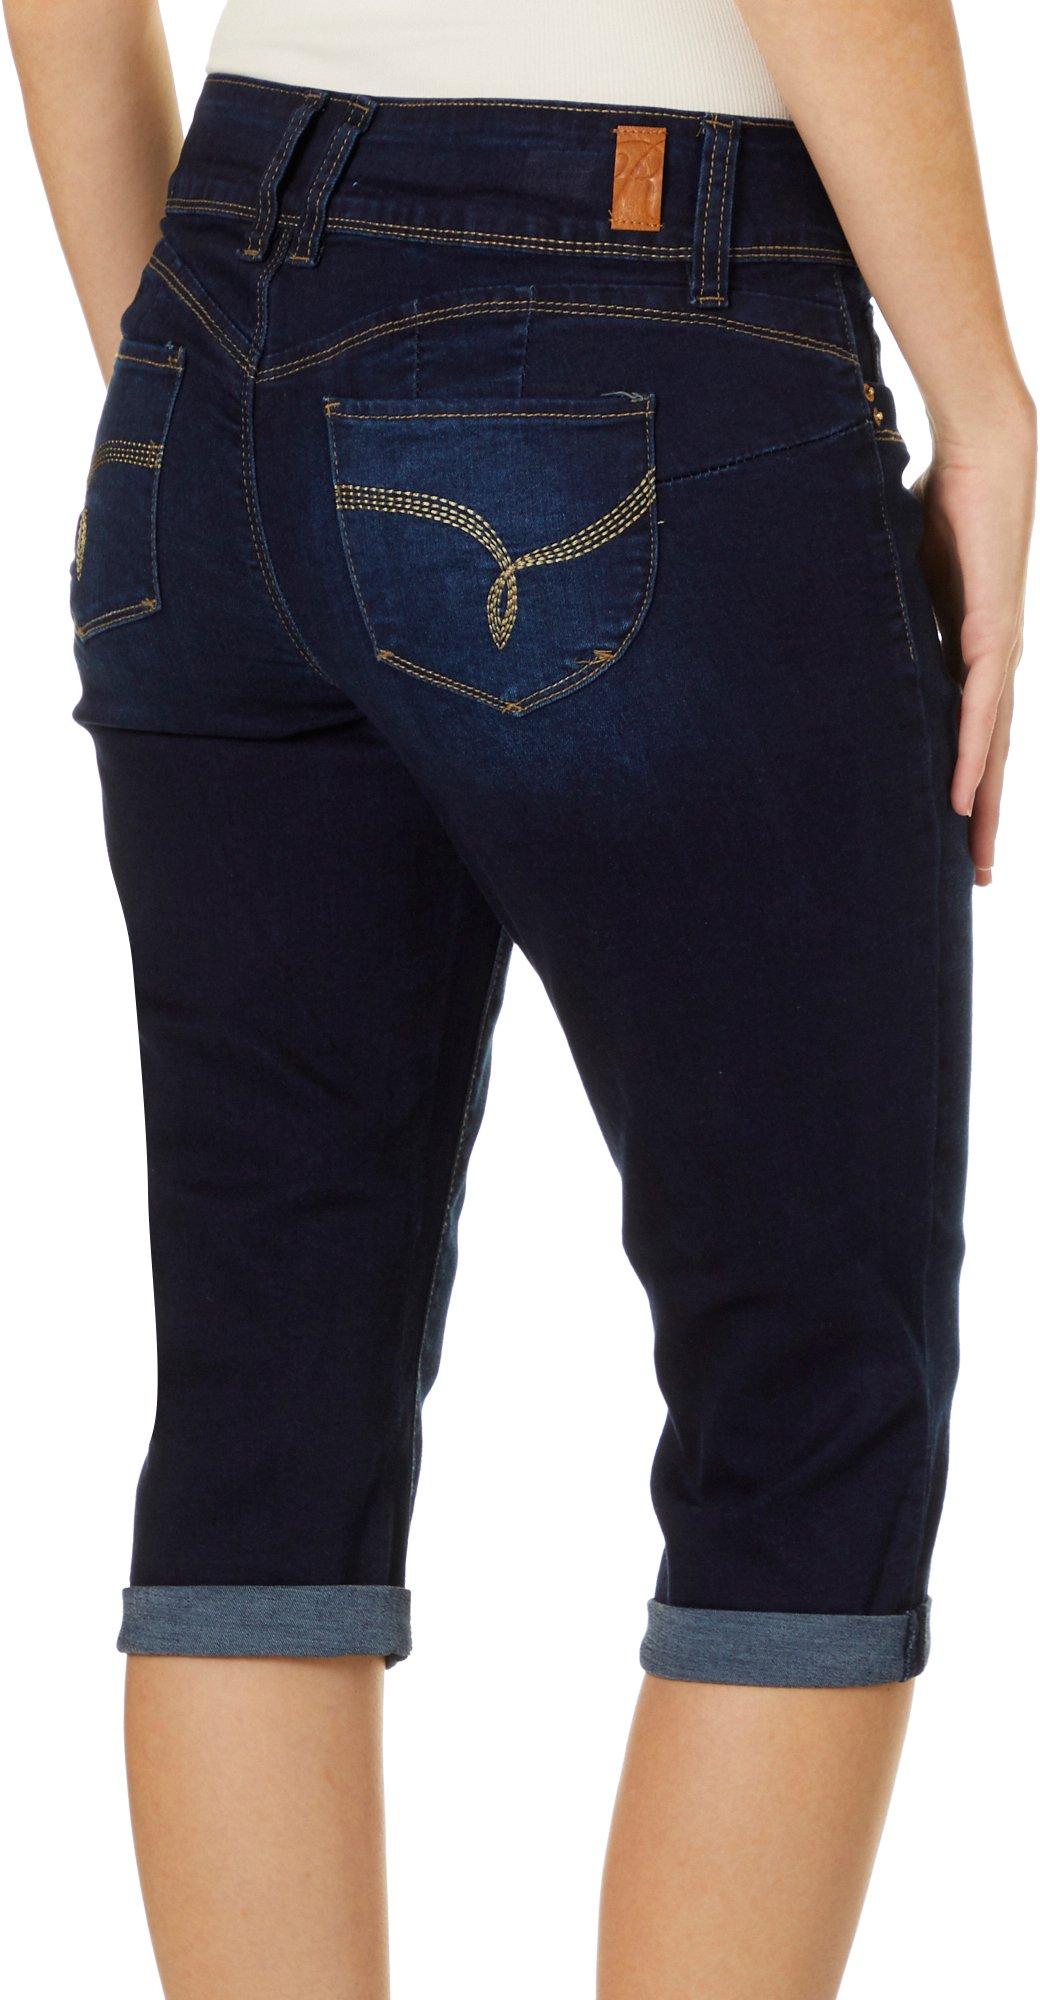 gloria vanderbilt elastic waist jeans